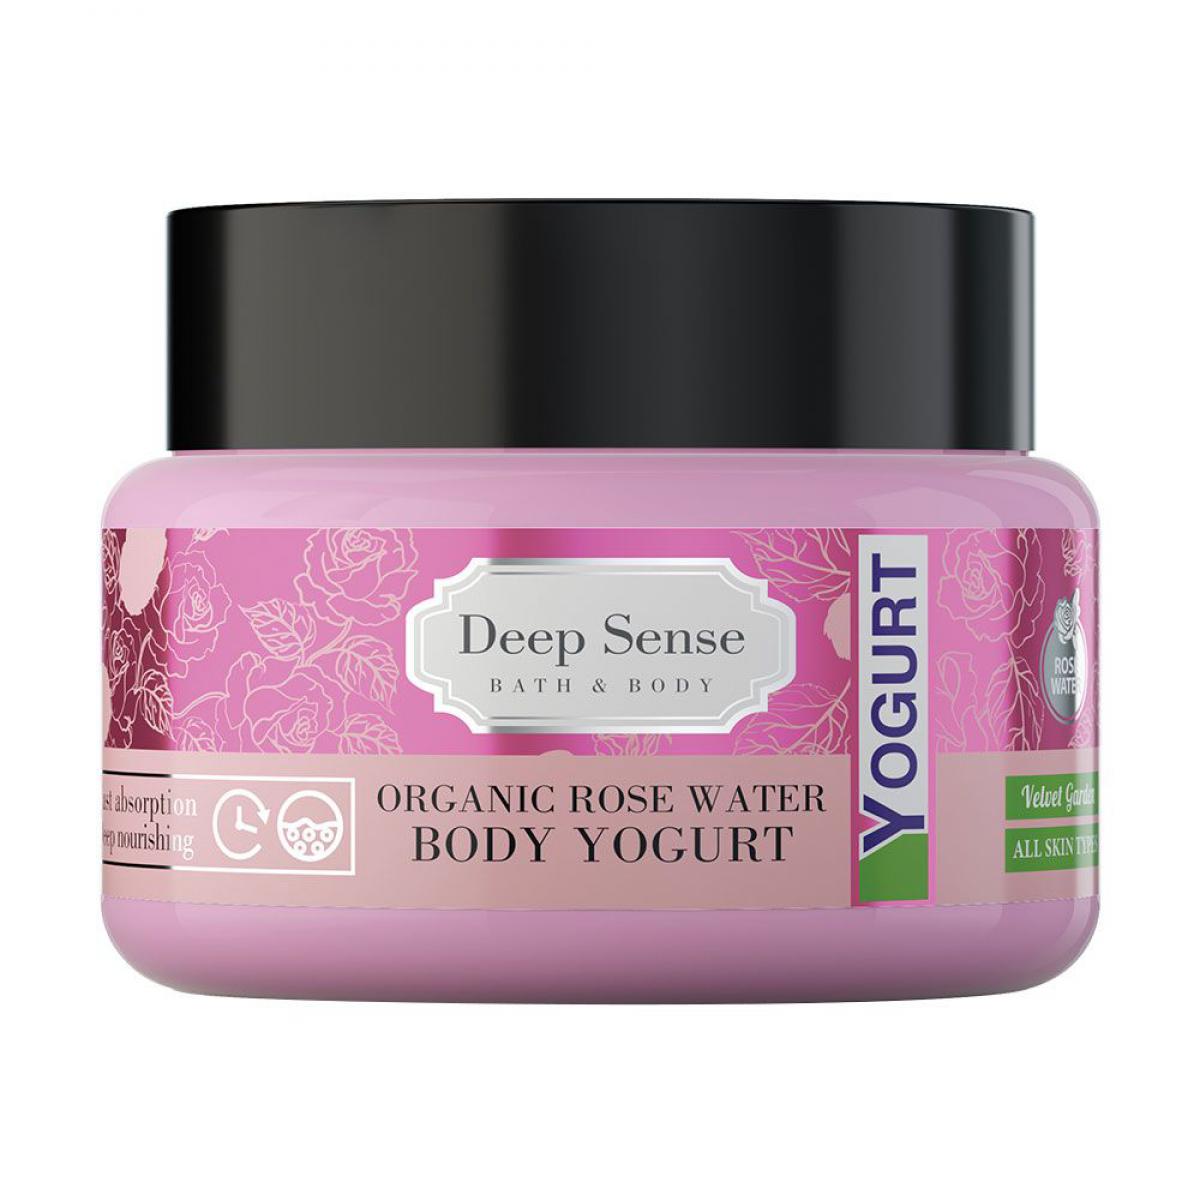 ماست بدن گلاب مناسب انواع پوست -  Organic Rose Water Body Yogurt 250ml DEEP SENSE 